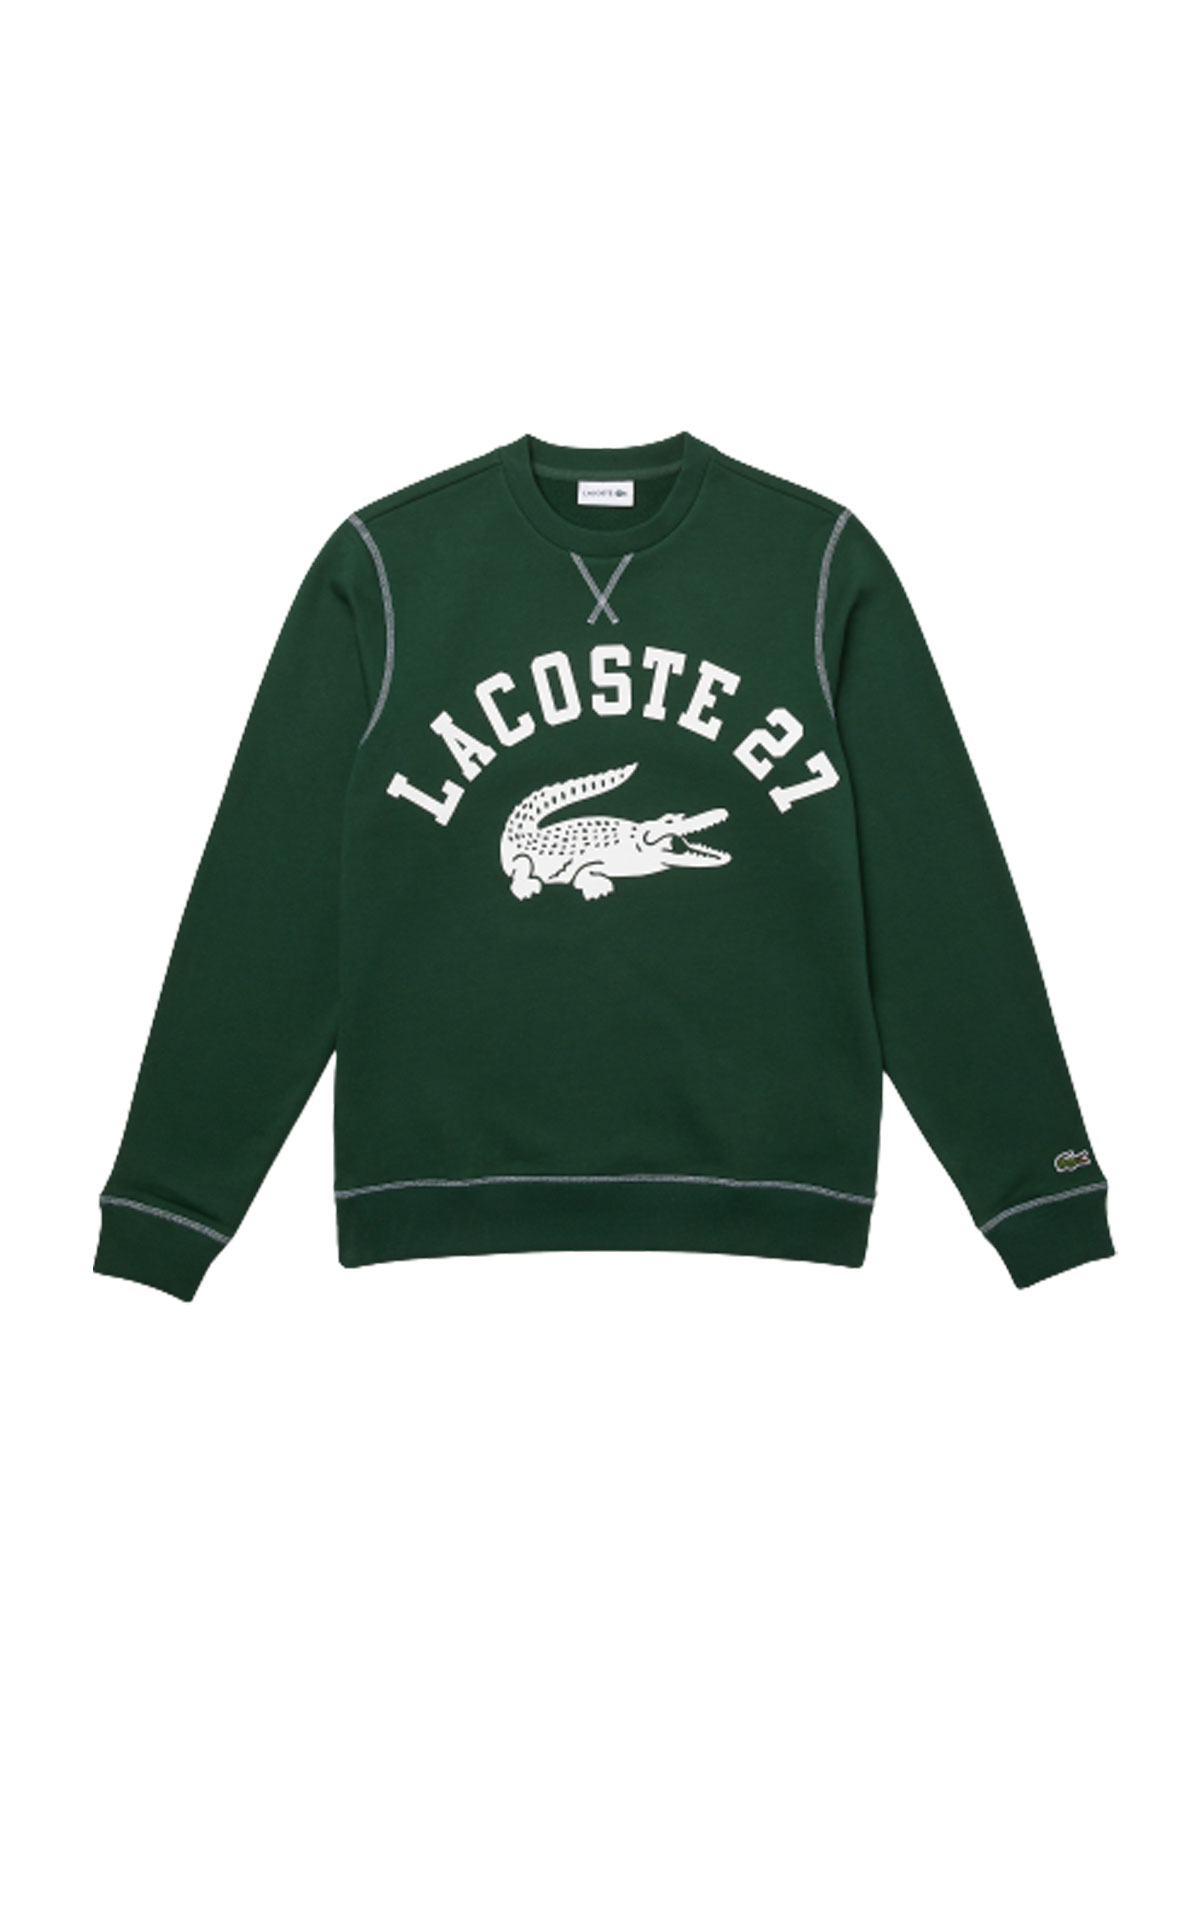 Lacoste 27 print fleece sweatshirt green from Bicester Village